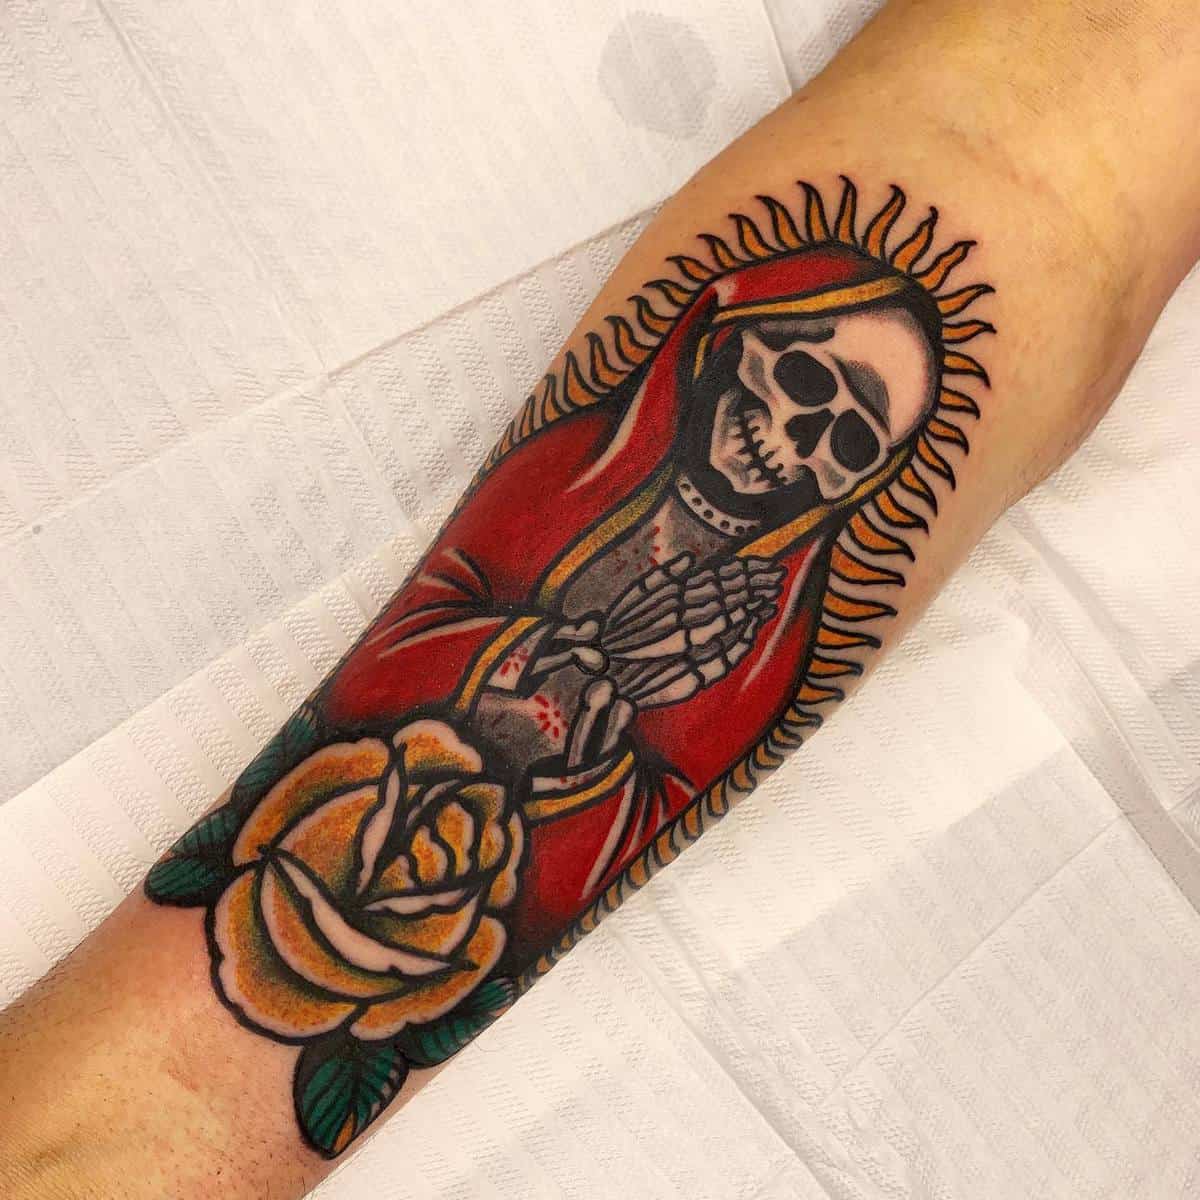 Traditional Santa Muerte Tattoo -deadlife.tattoo